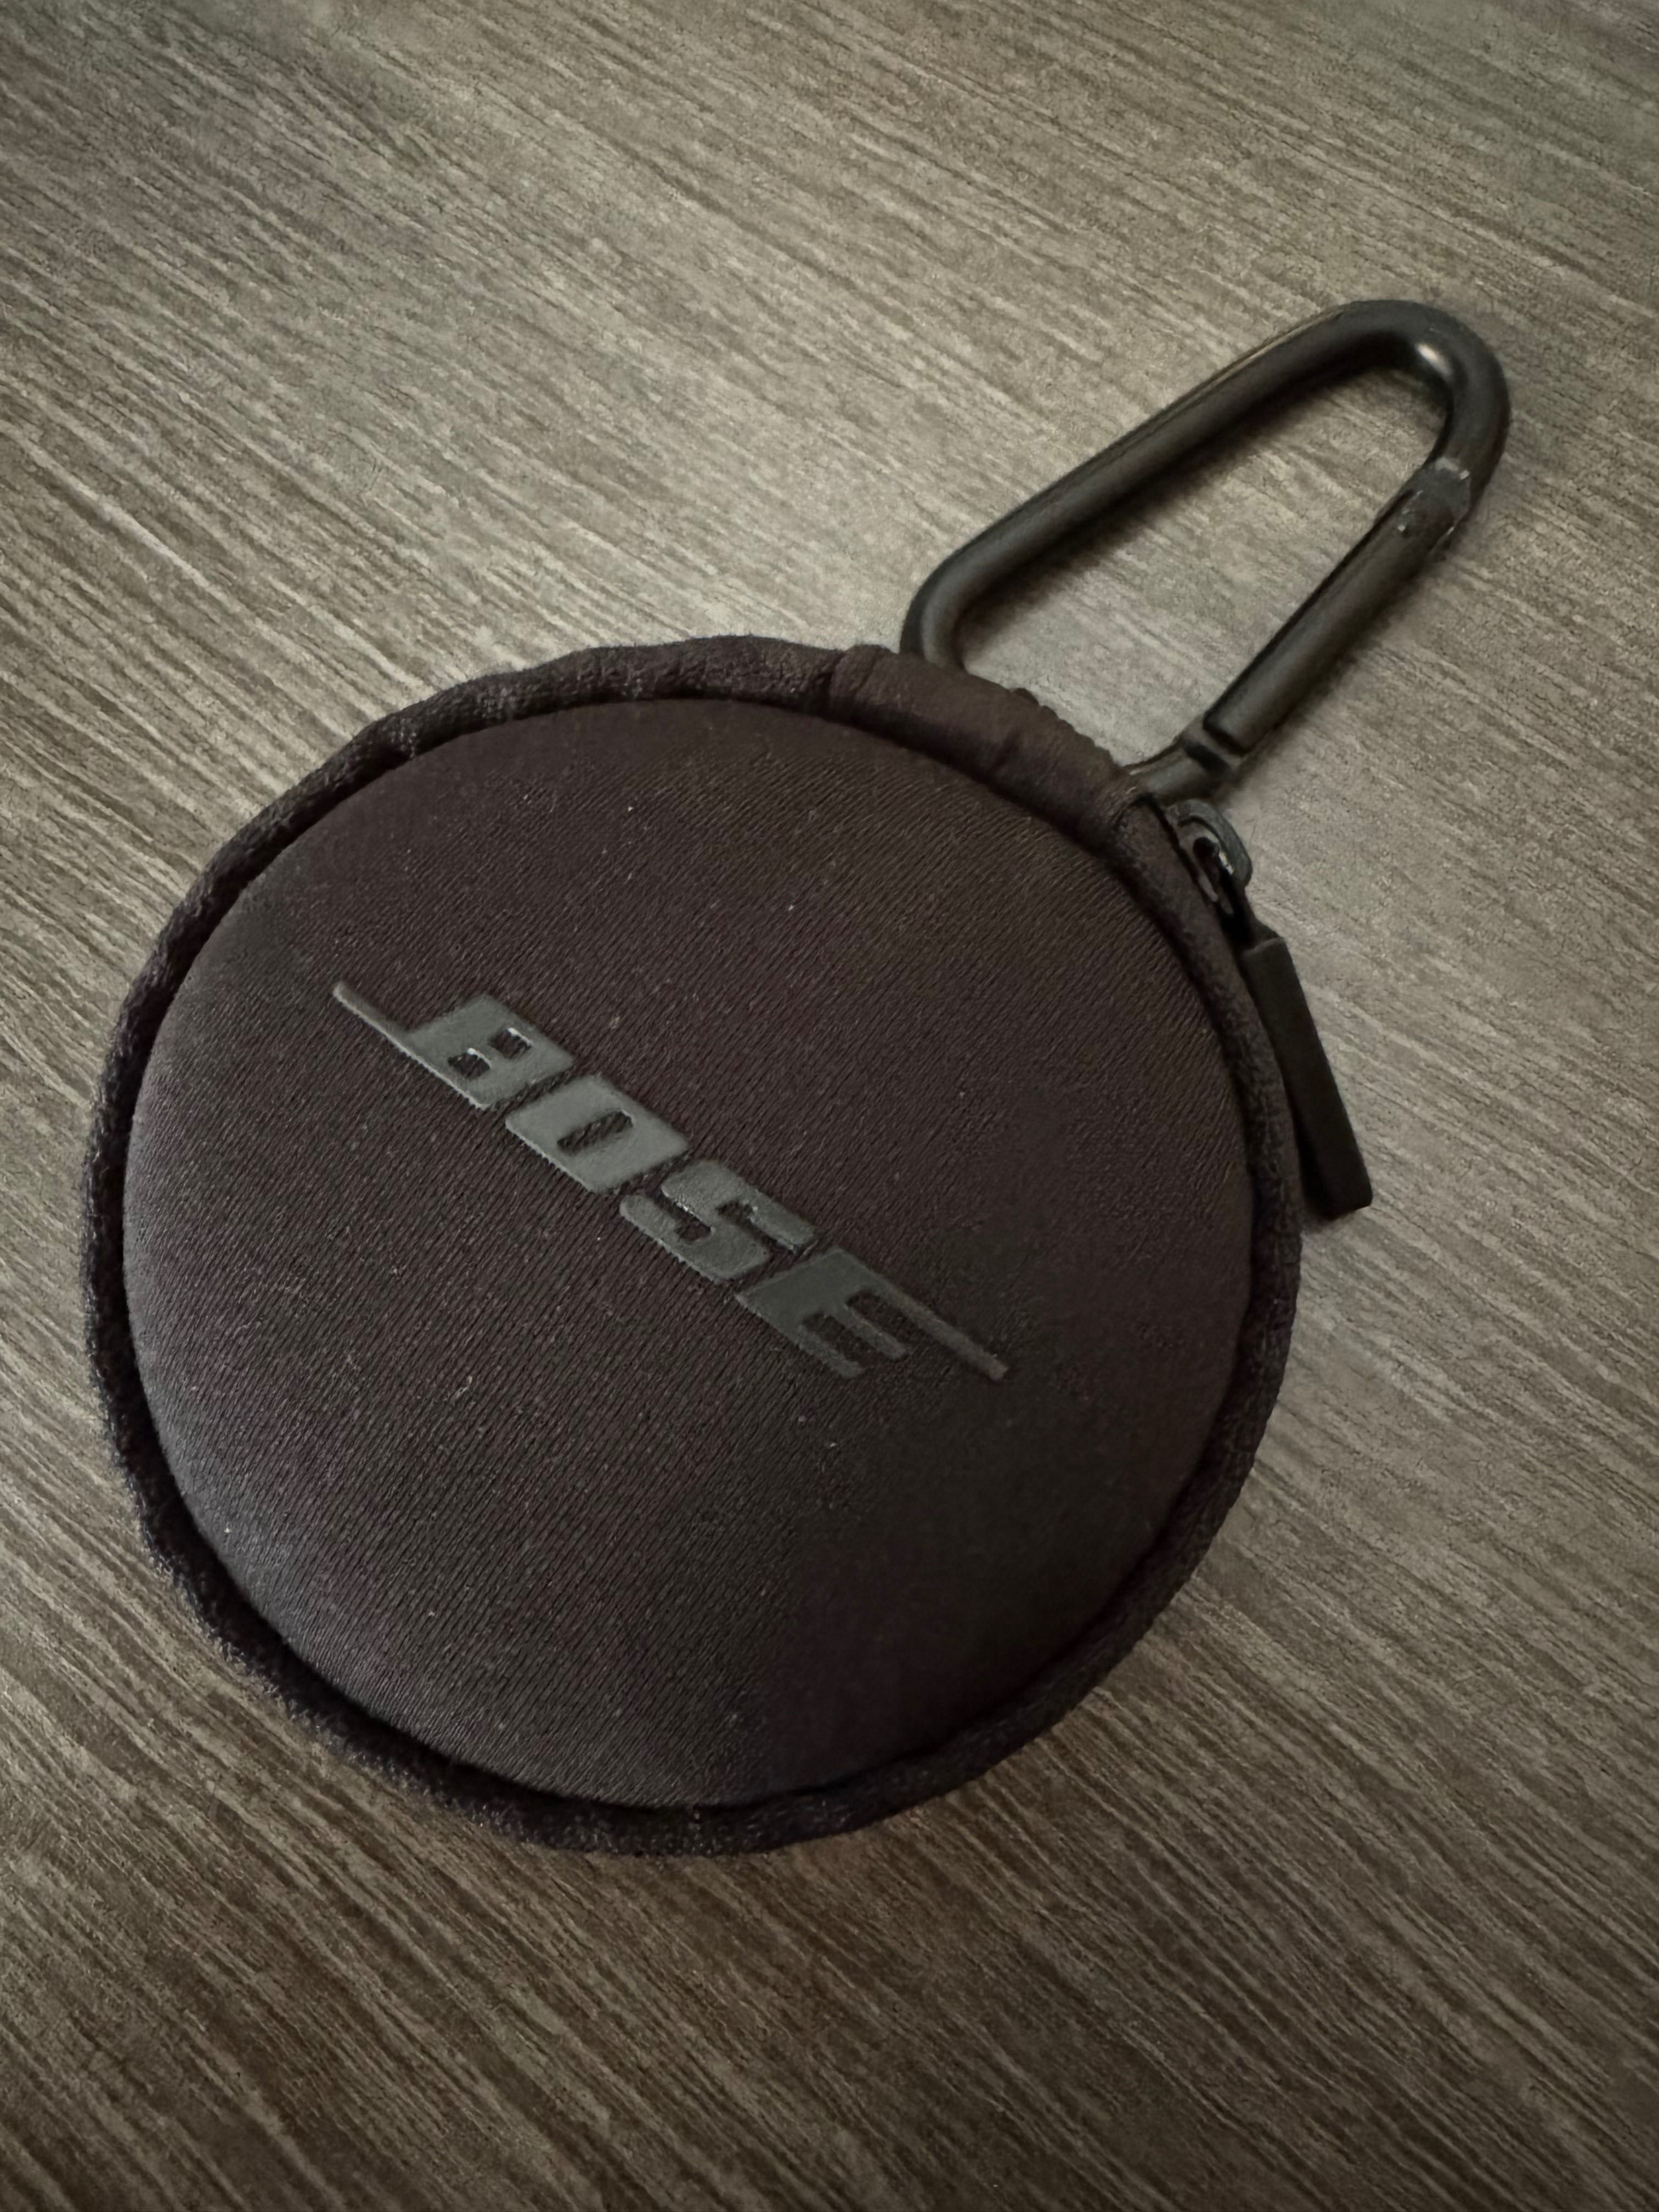 Bose SoundSport, Wireless Earbuds, (Sweatproof Bluetooth Headphones